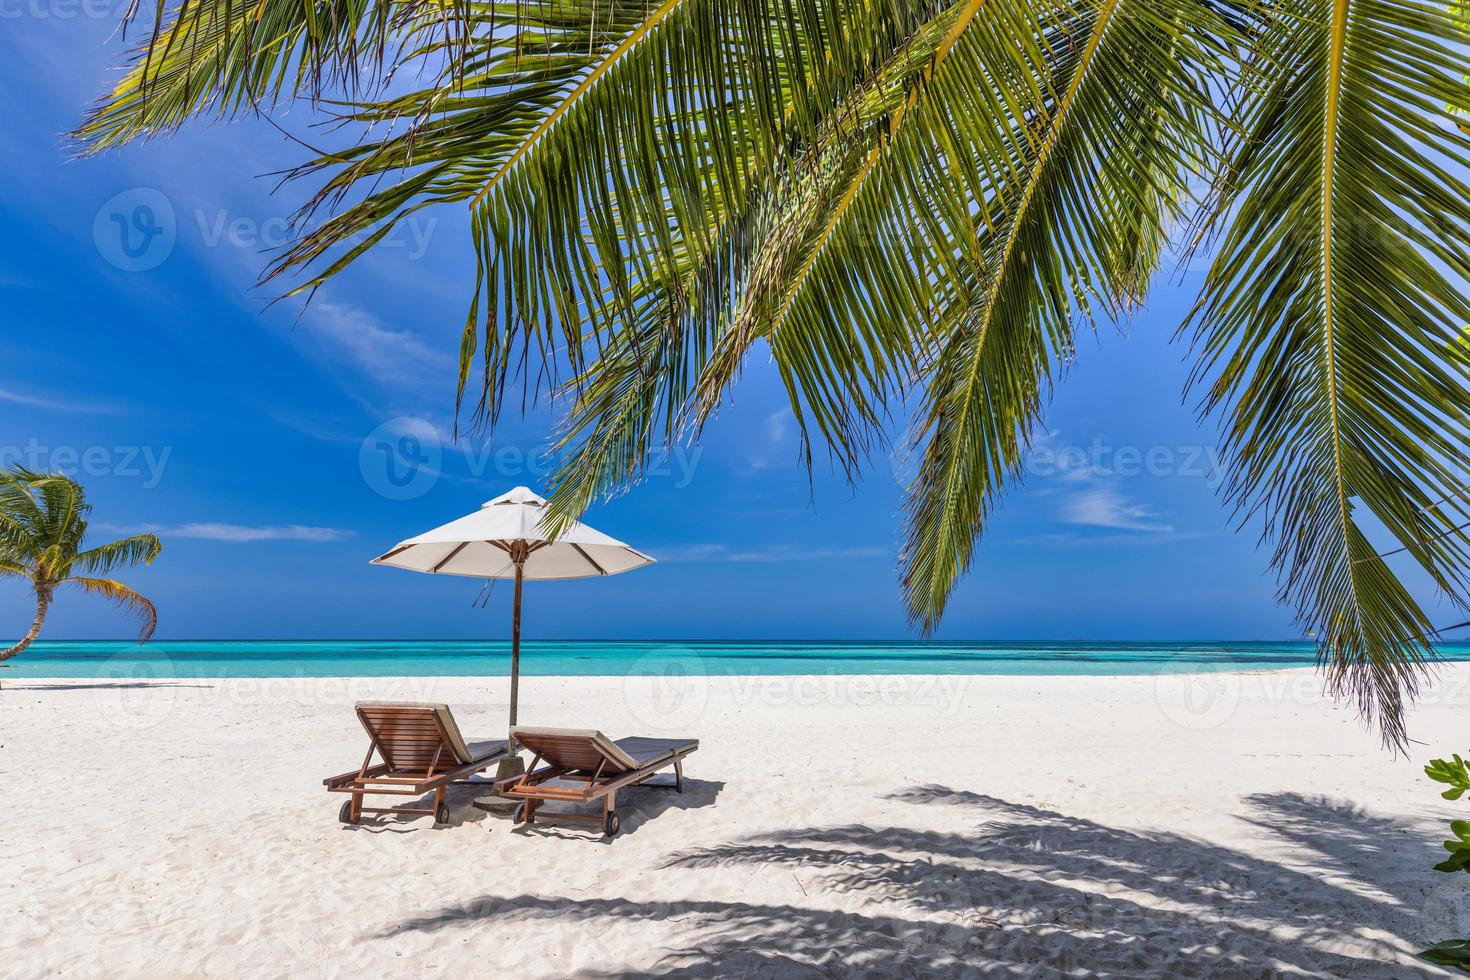 mooi tropisch landschap, paar stoelen zon bedden paraplu onder palm bladeren. zomer achtergrond, exotisch reizen strand, zonnig dag paradijs kust. verbazingwekkend landschap, zee zand lucht kom tot rust toevlucht vakantie foto